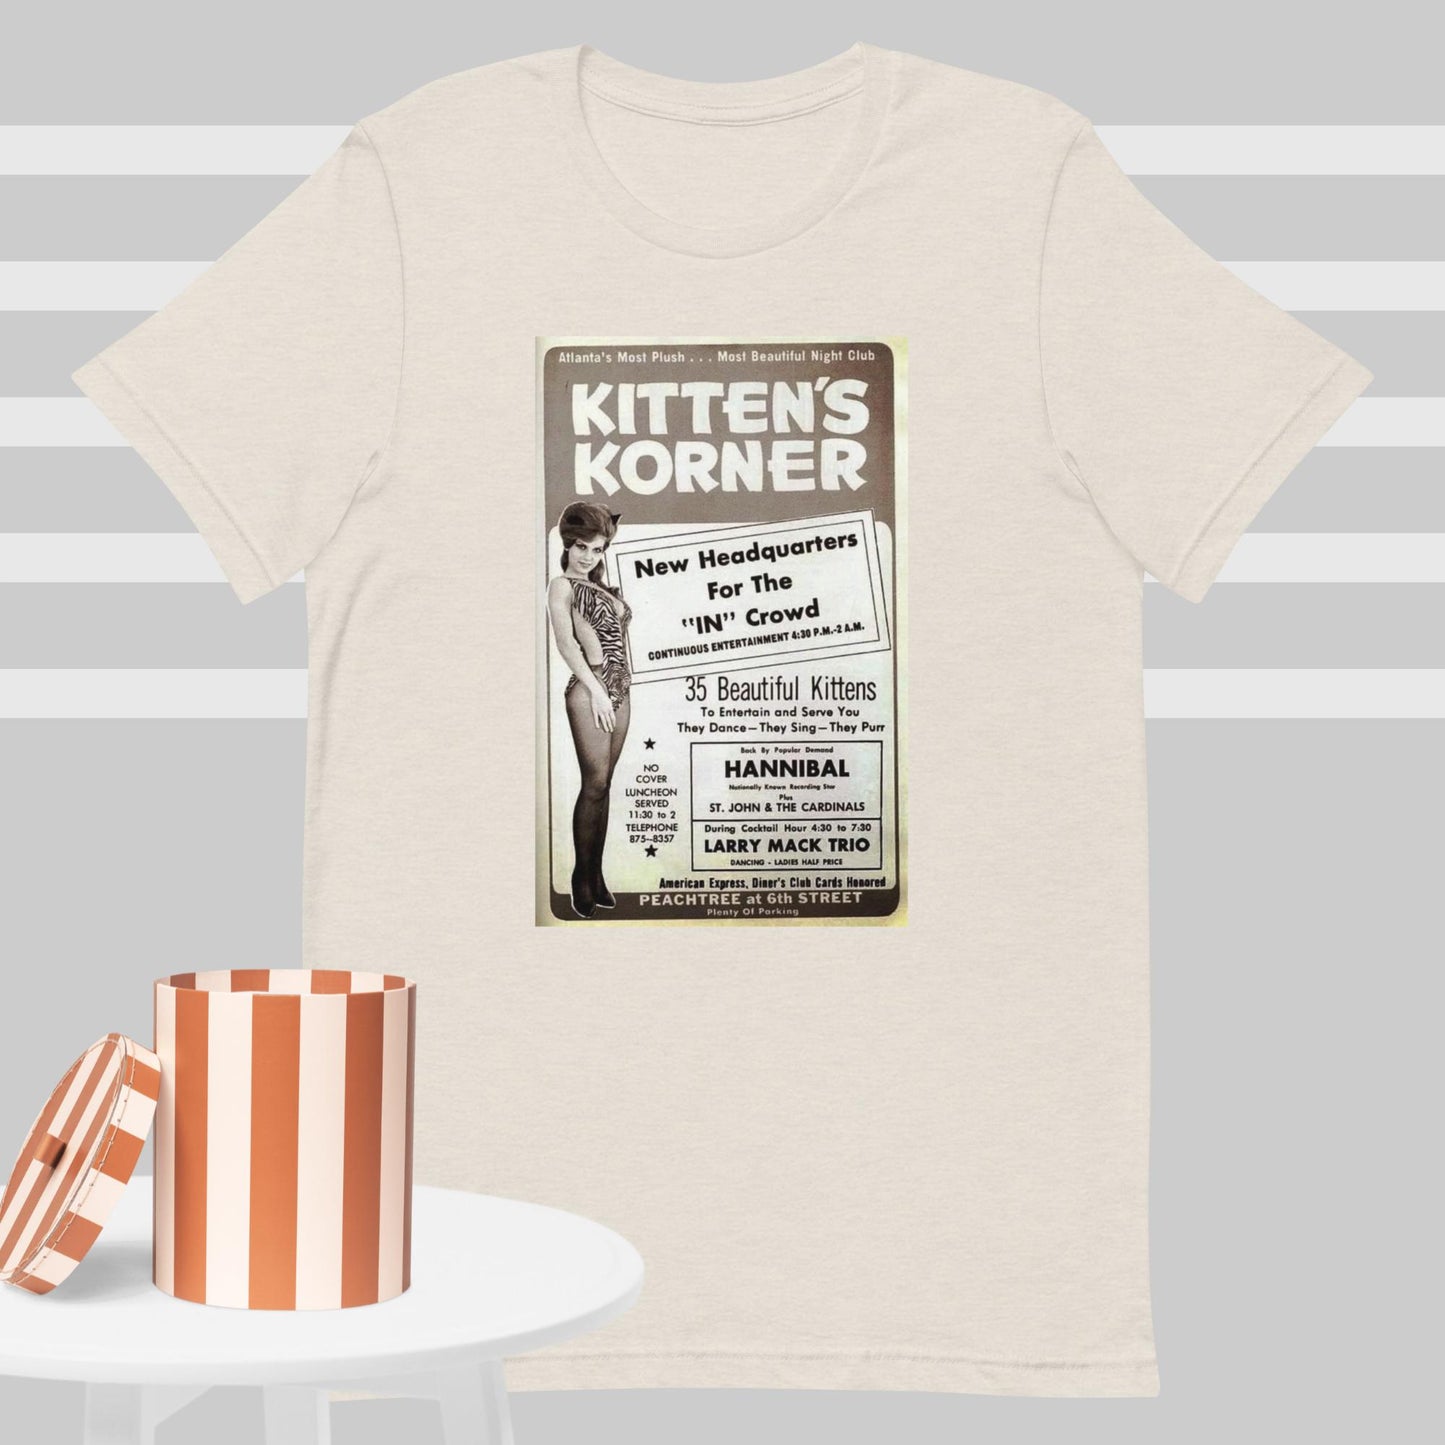 "Kitten's Korner...Atlanta's Most Plush Nightclub"